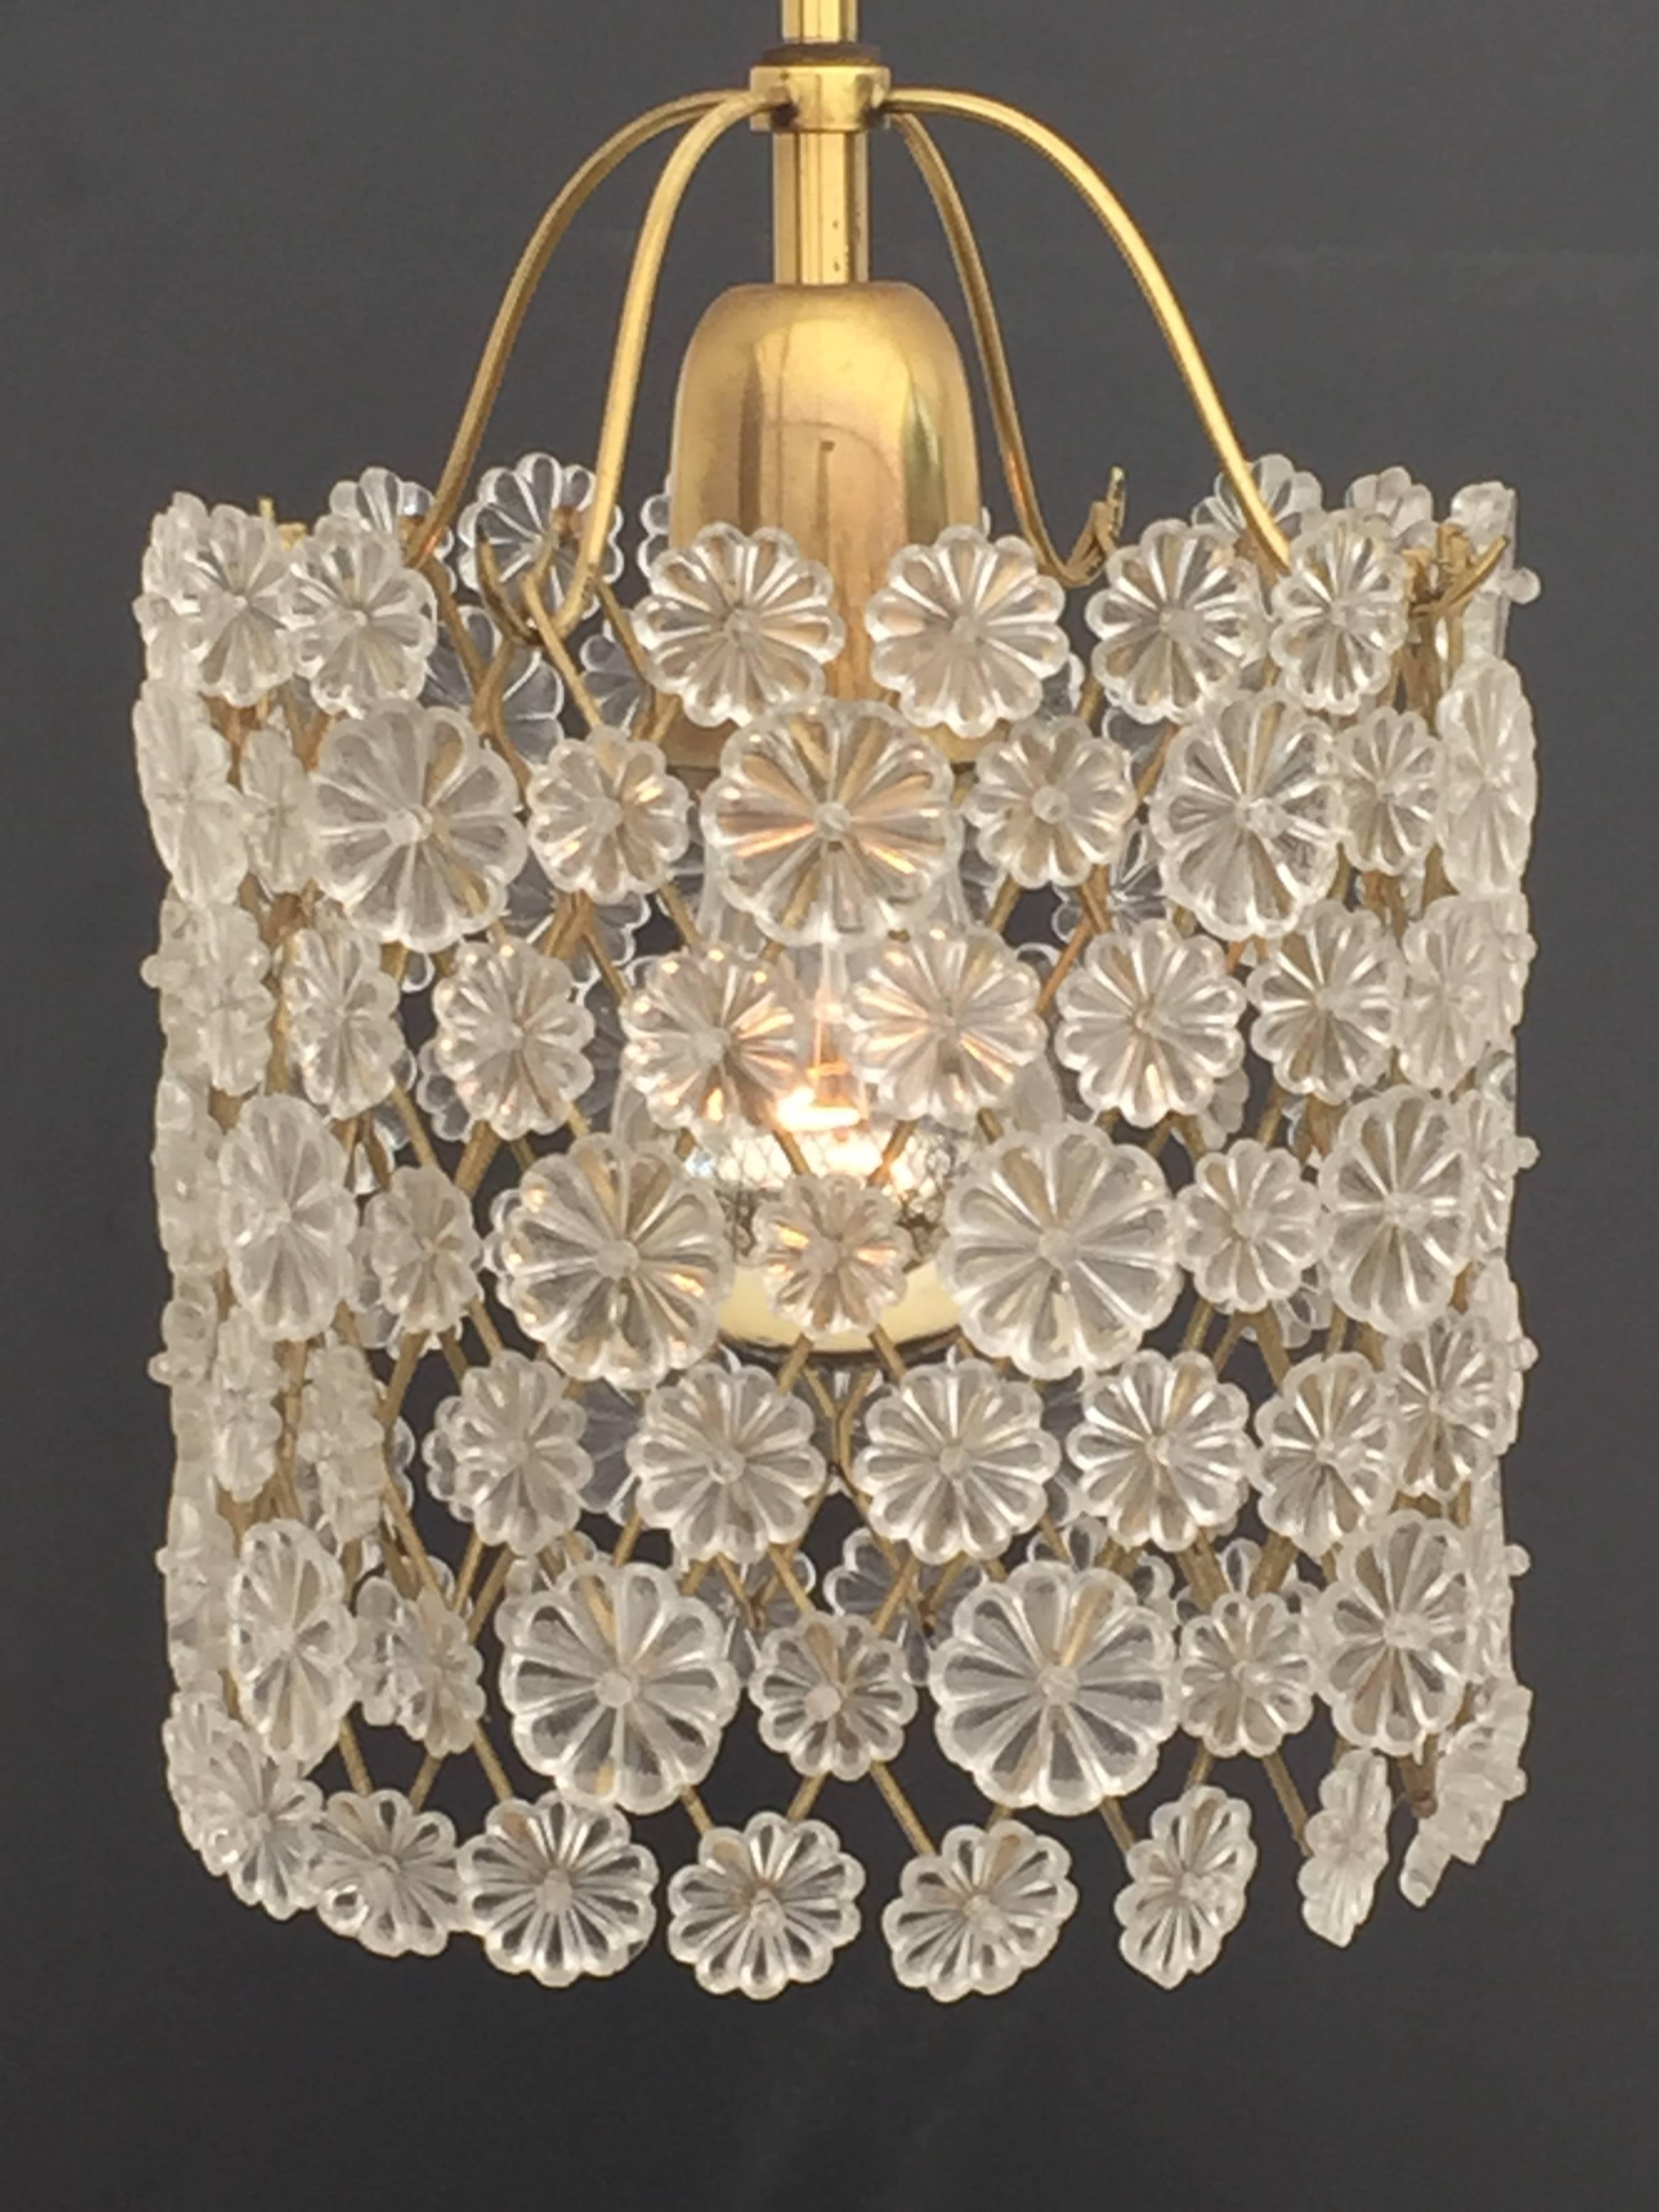 Petit floral glass lighting pendant attributed to Emil Stejnar.